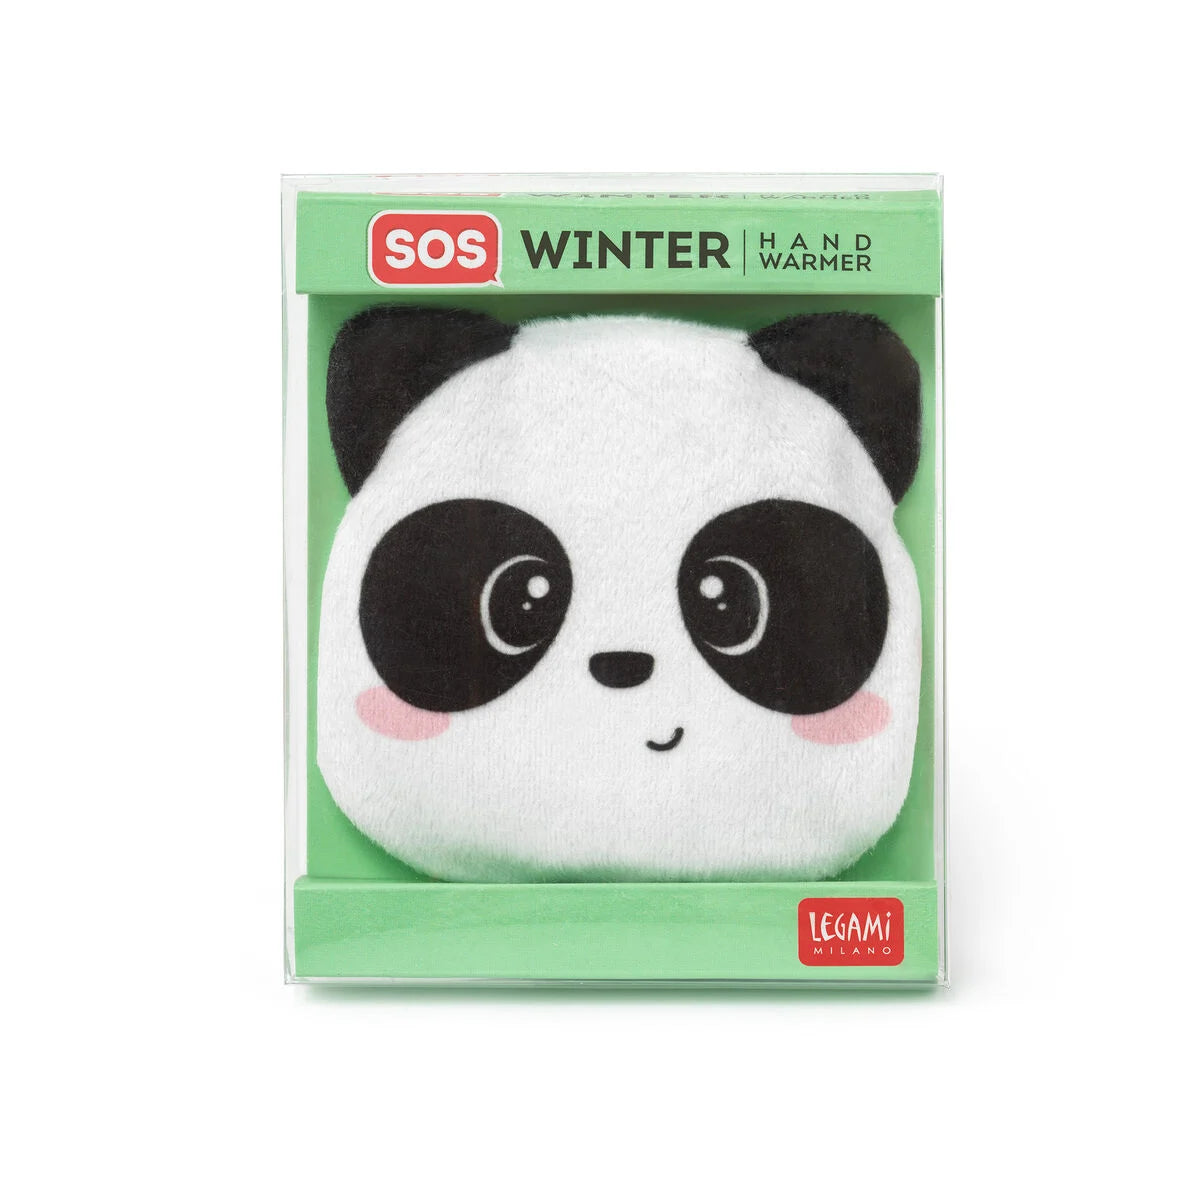 Fab Gifts | Legami Hand Warmer Panda by Weirs of Baggot Street